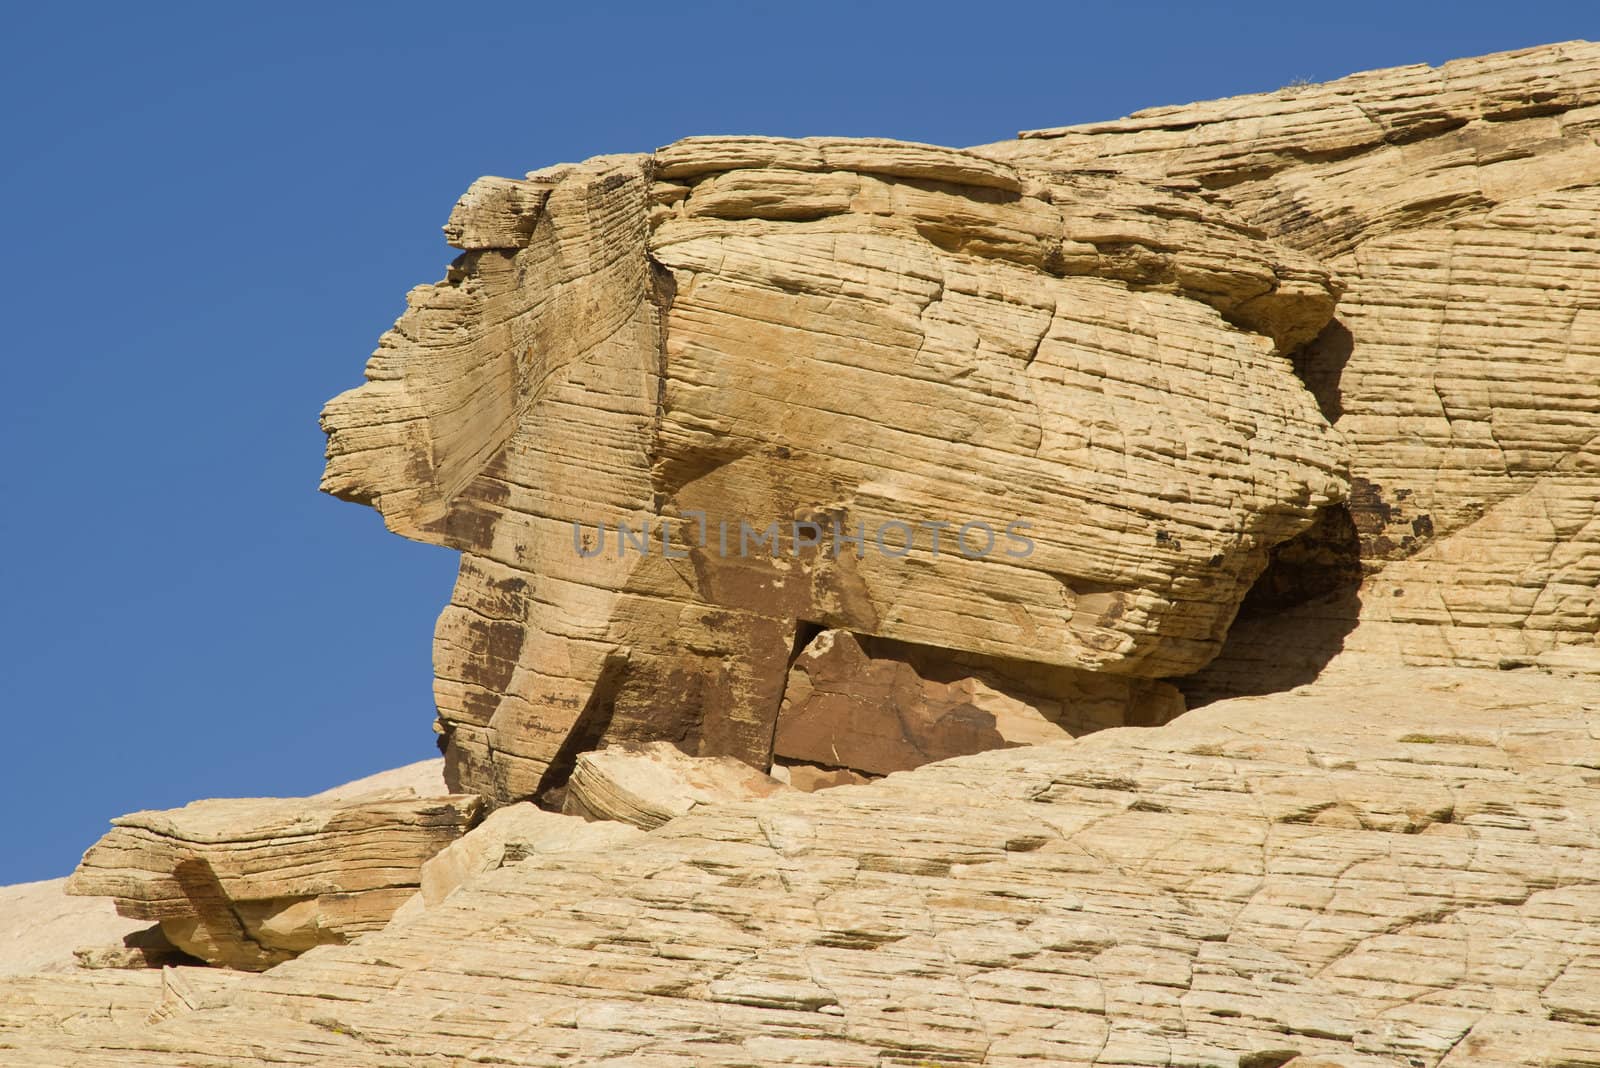 A rabbit shaped rock formation at Red Rock Canyon, Nevada